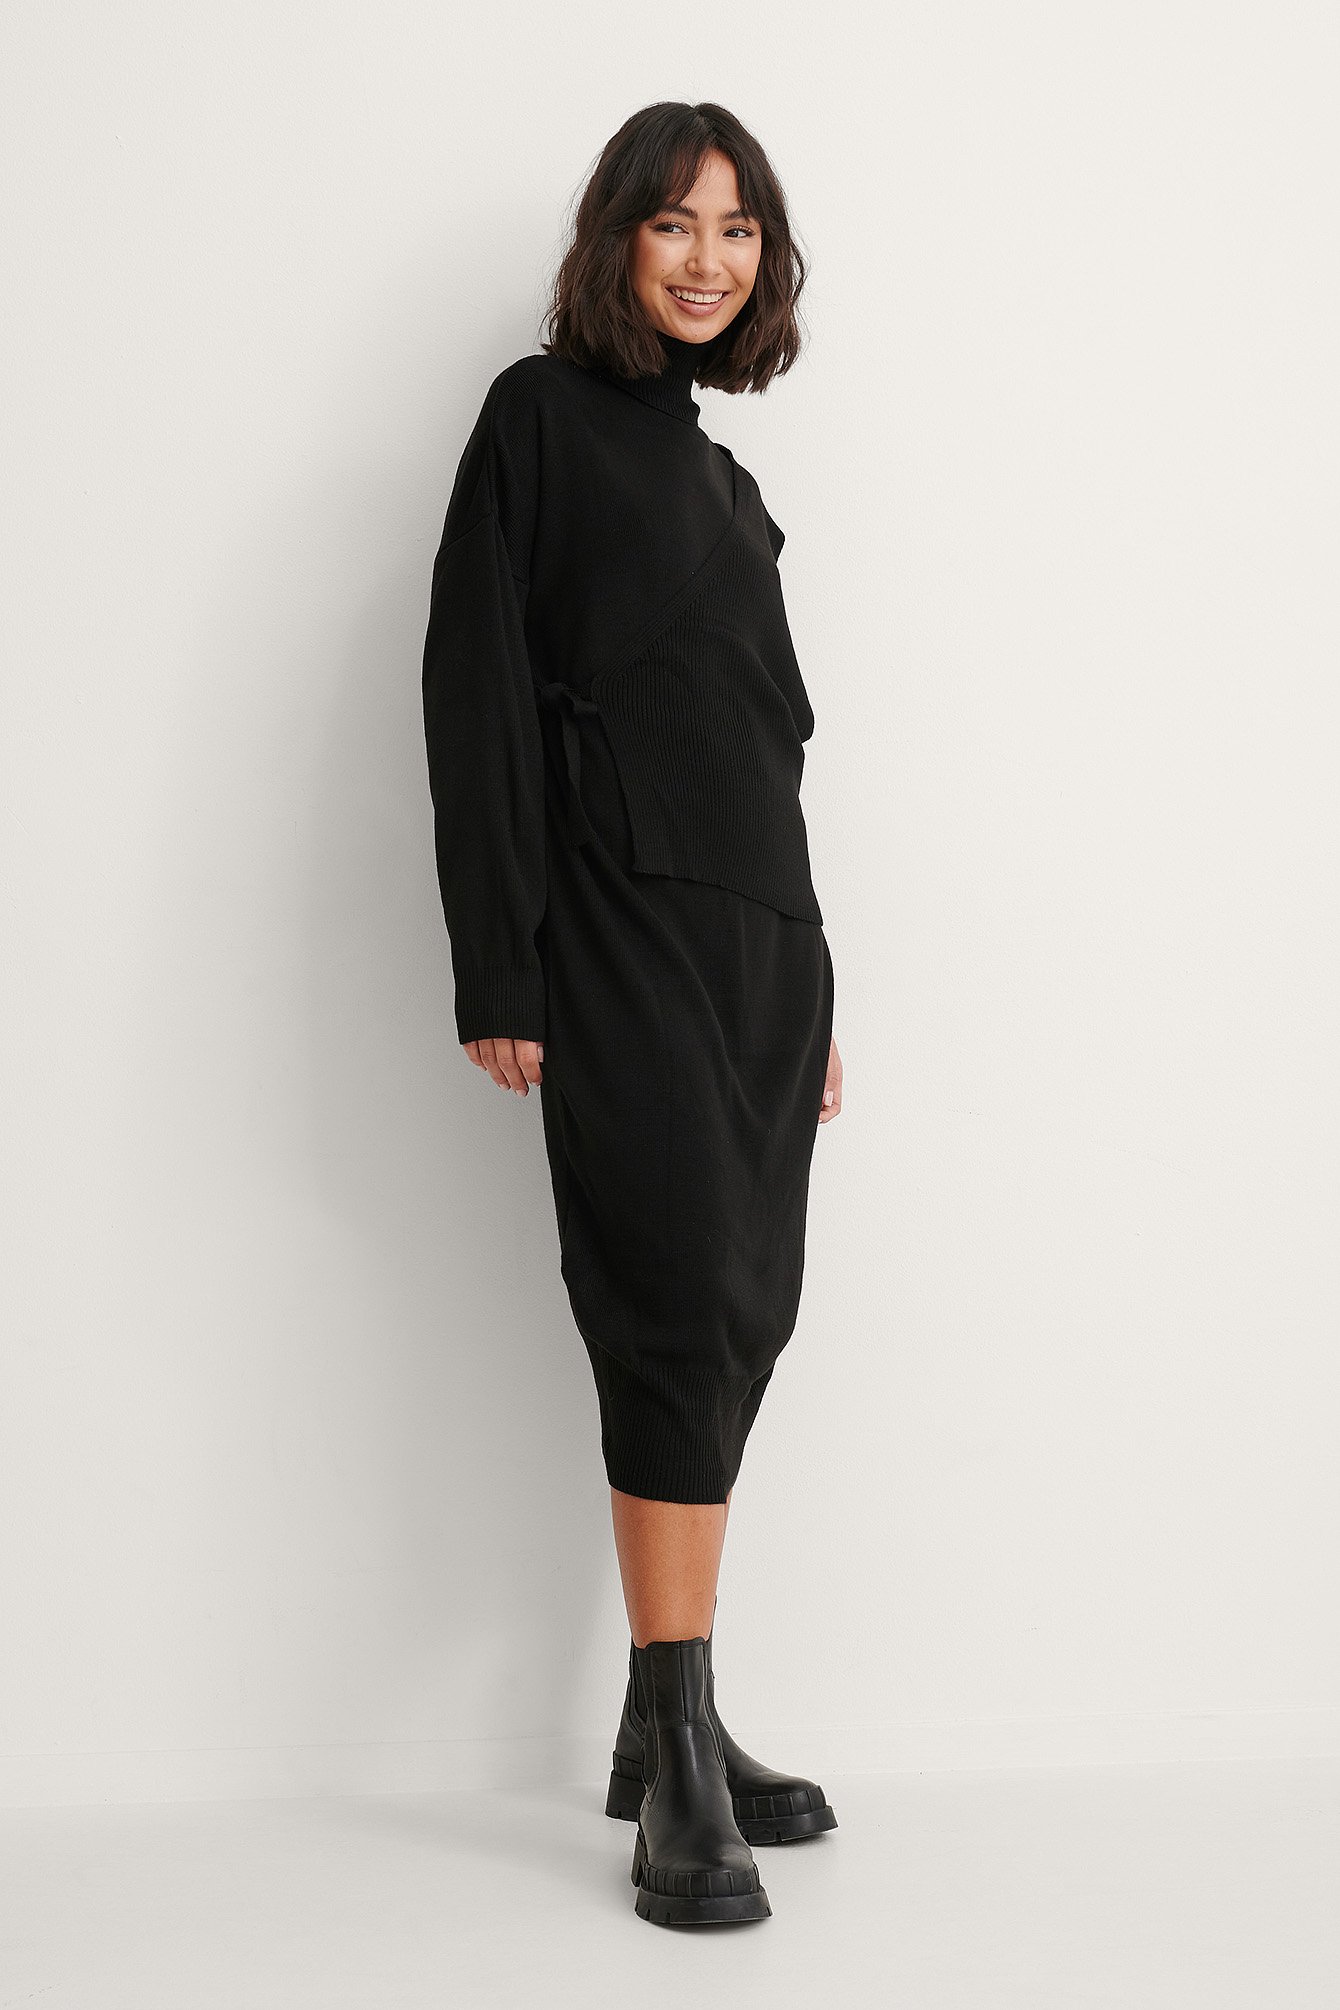 Carmen Knit Midi Dress Outfit.